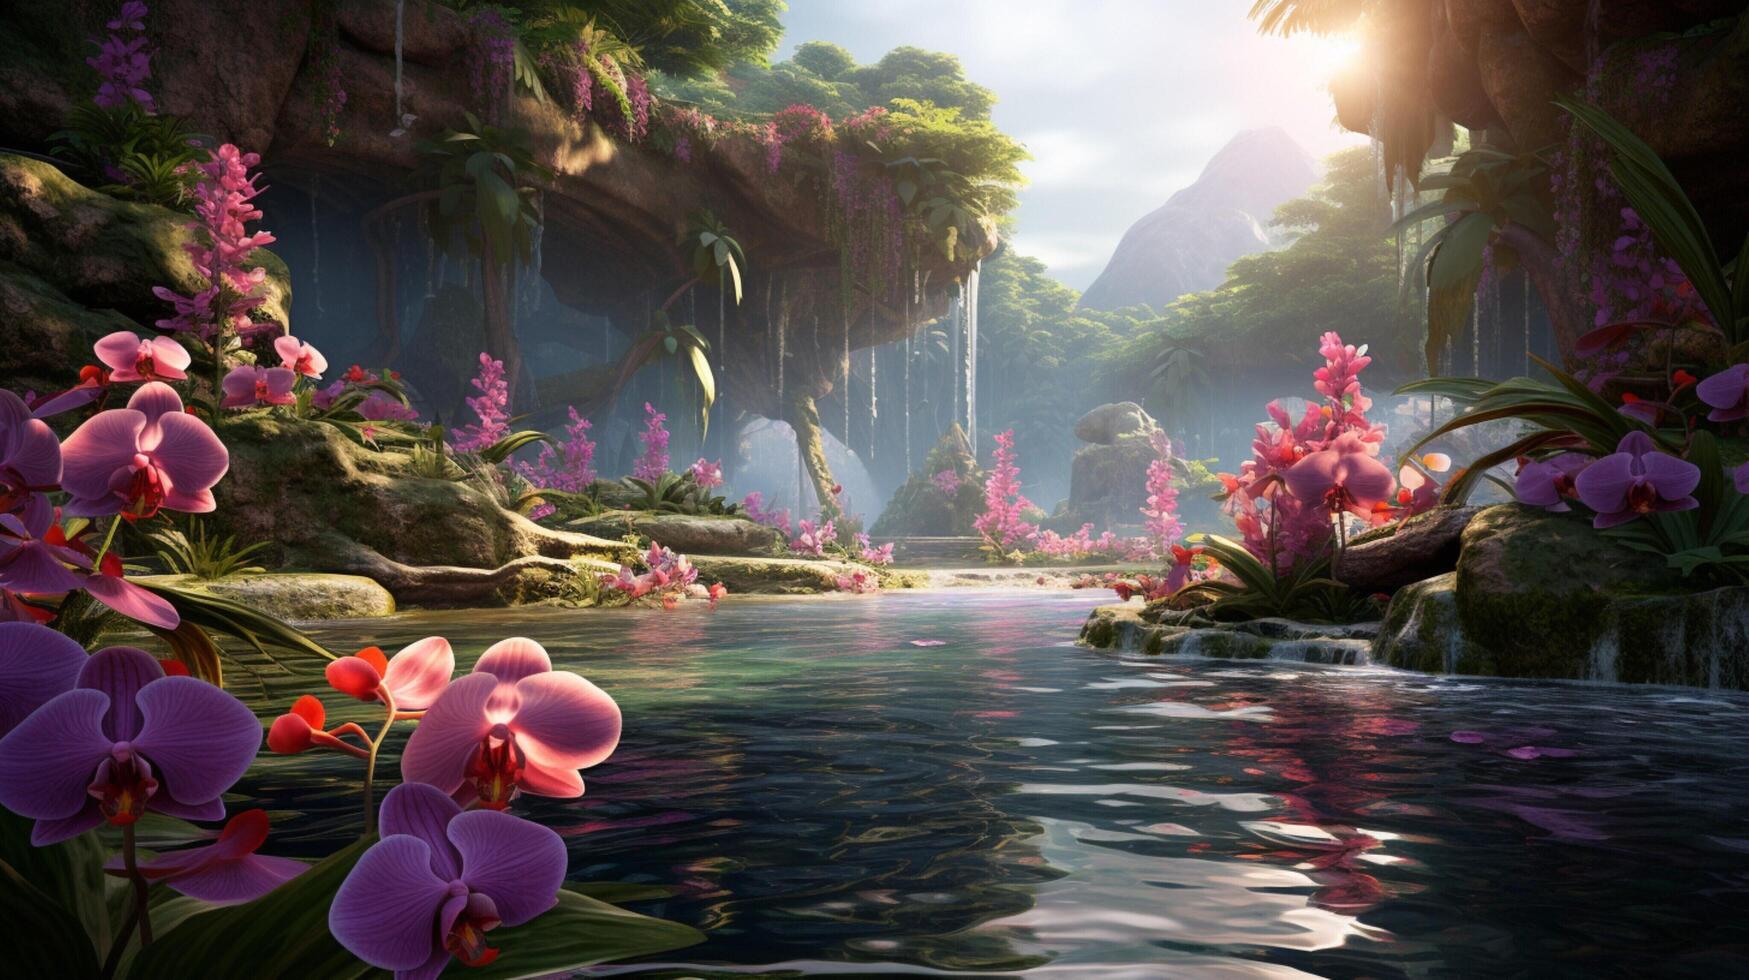 ai genererad orkide oas bakgrund foto